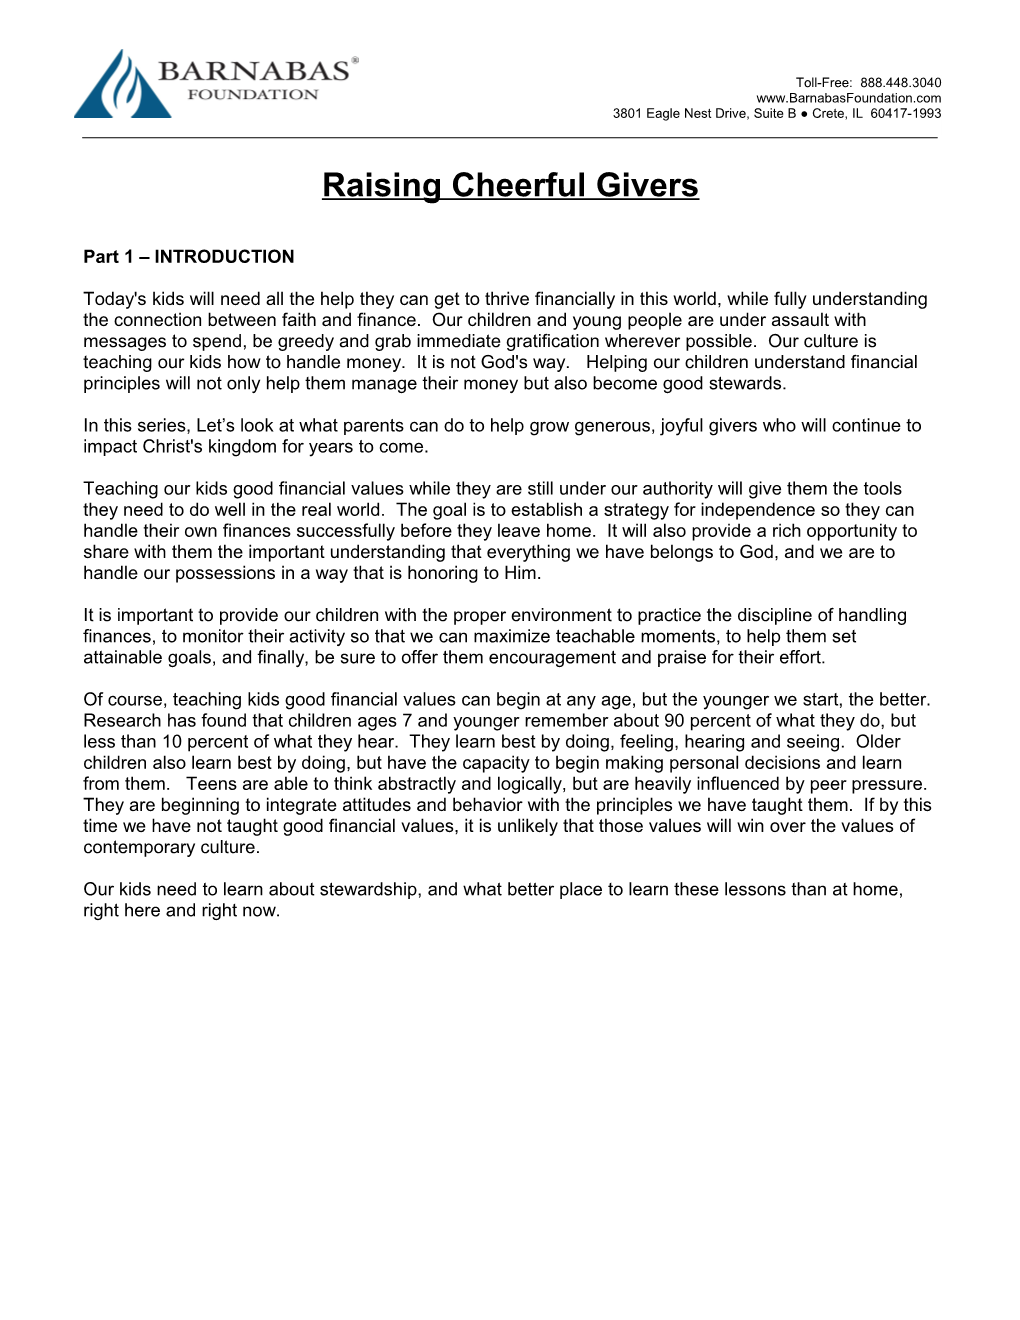 Raising Cheerful Givers